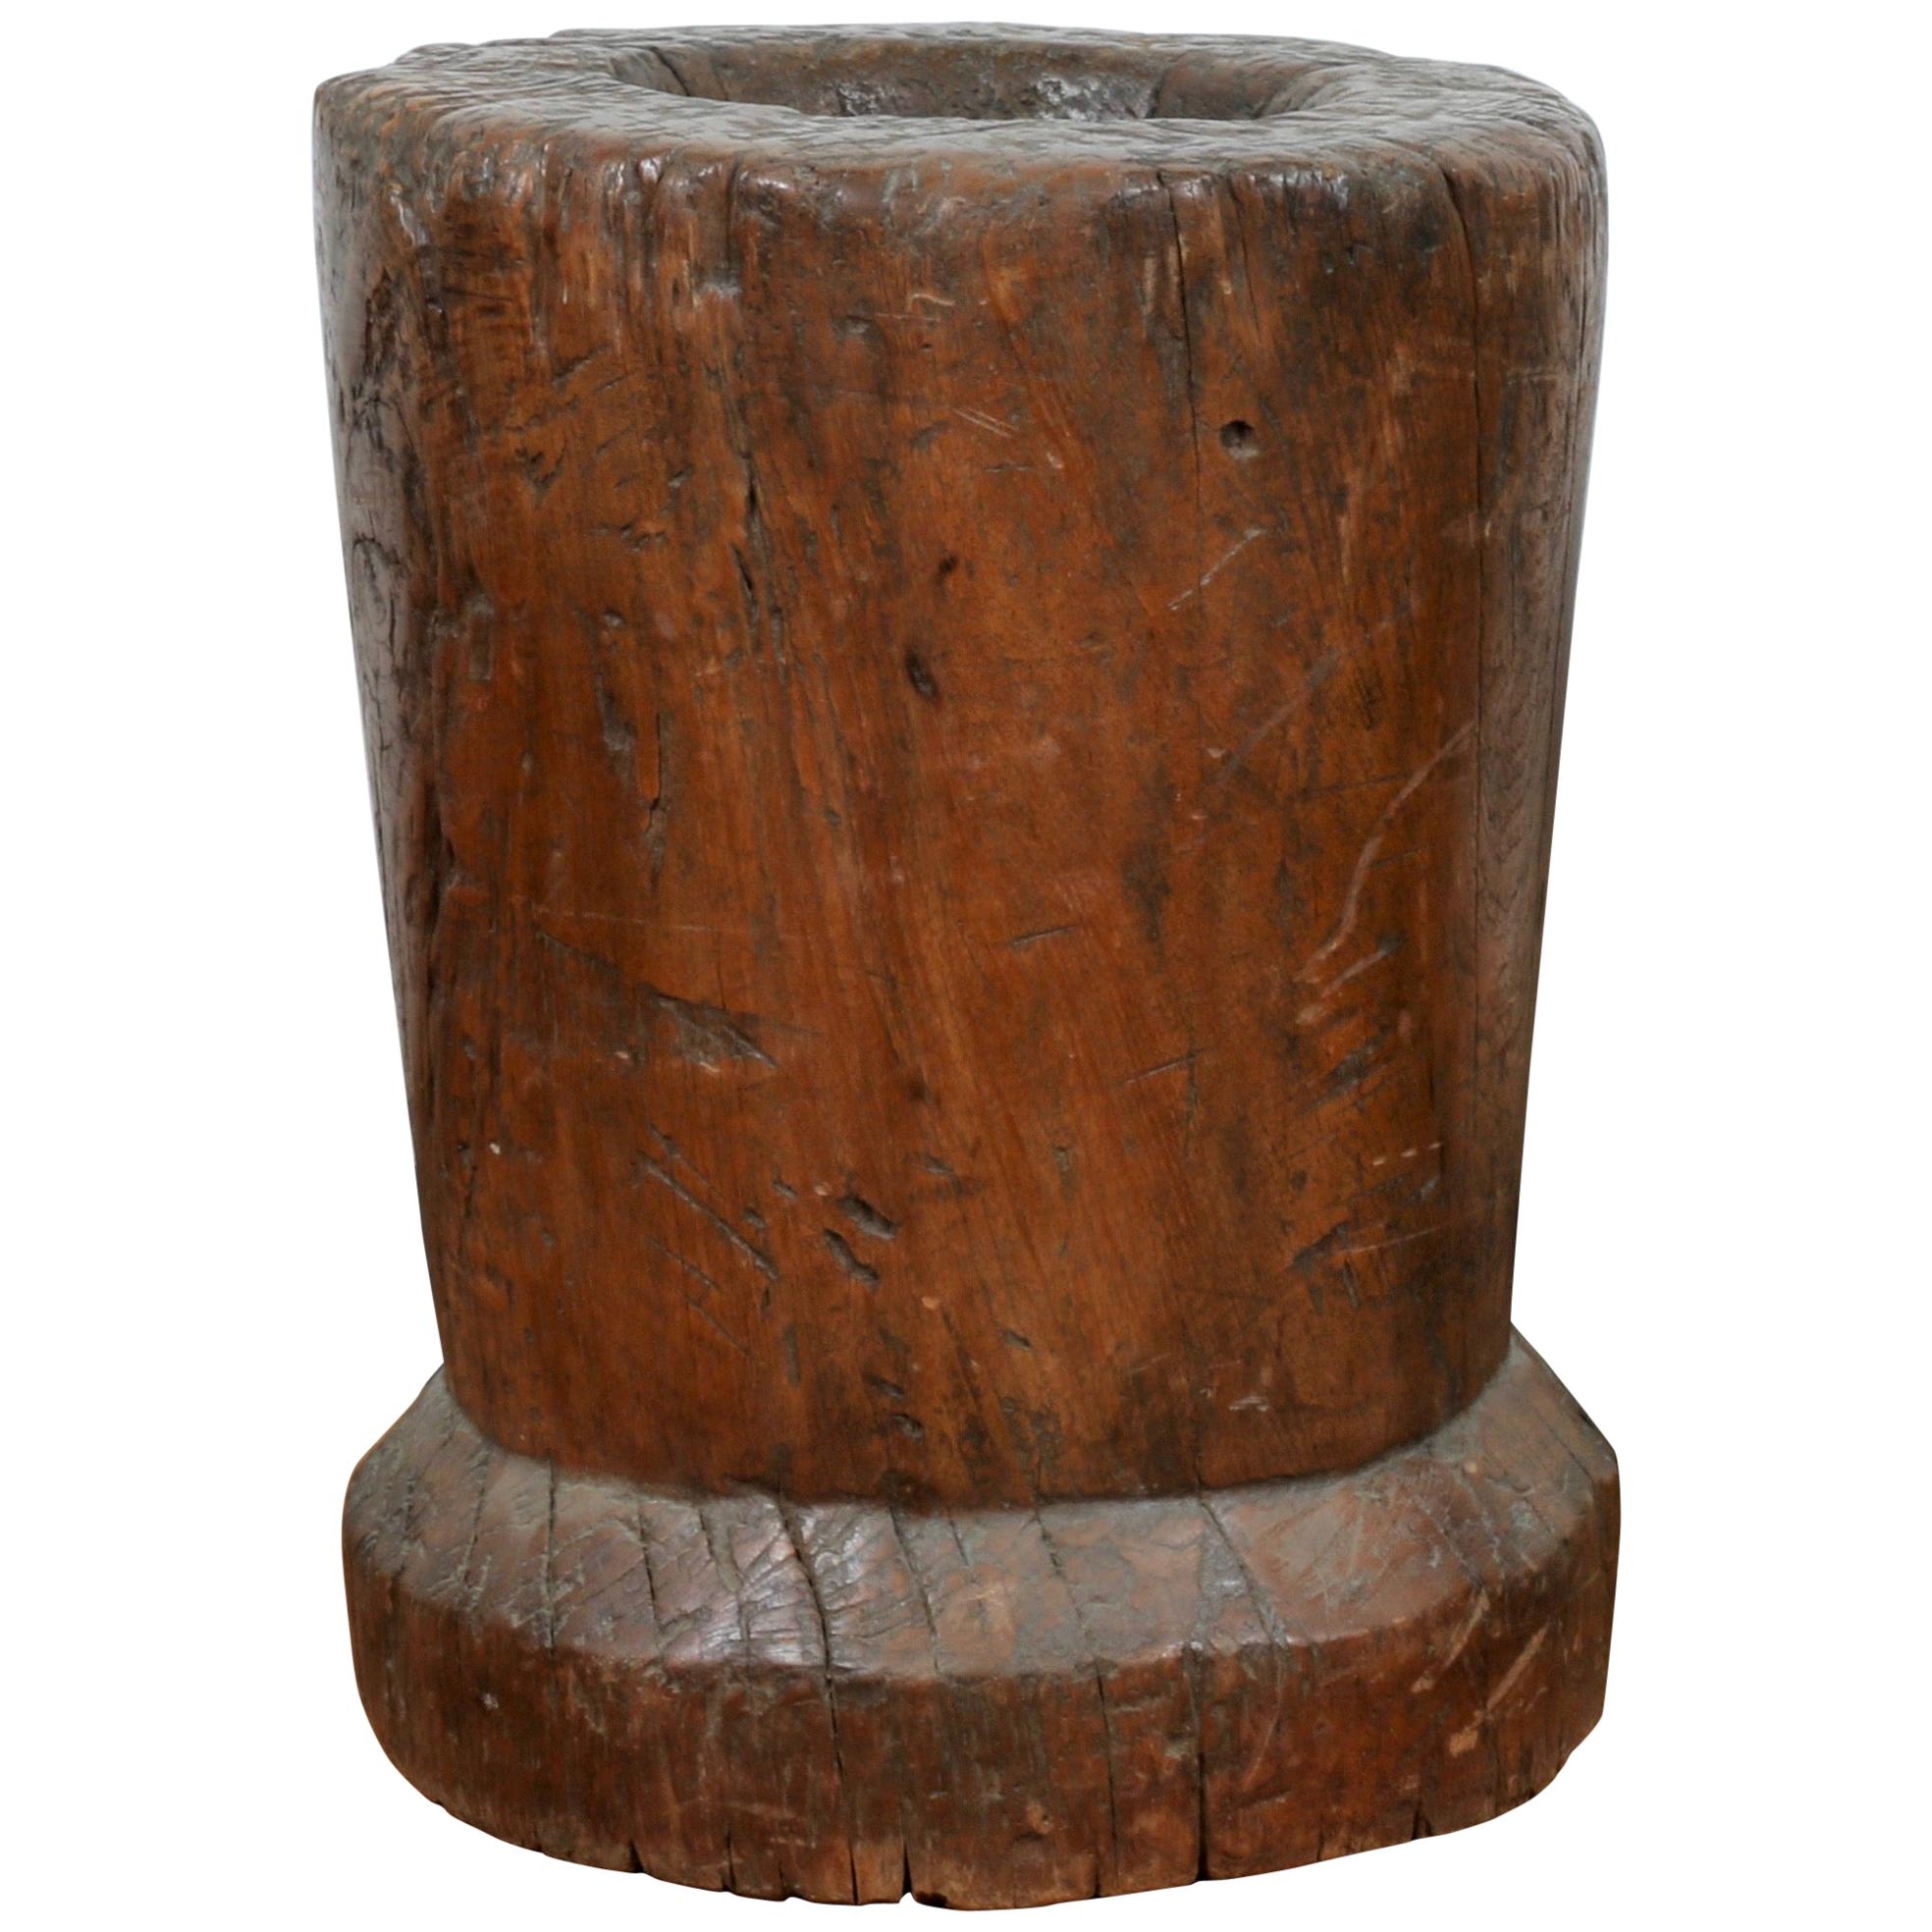 Rustic Wooden Large Mortar Bowl Urn